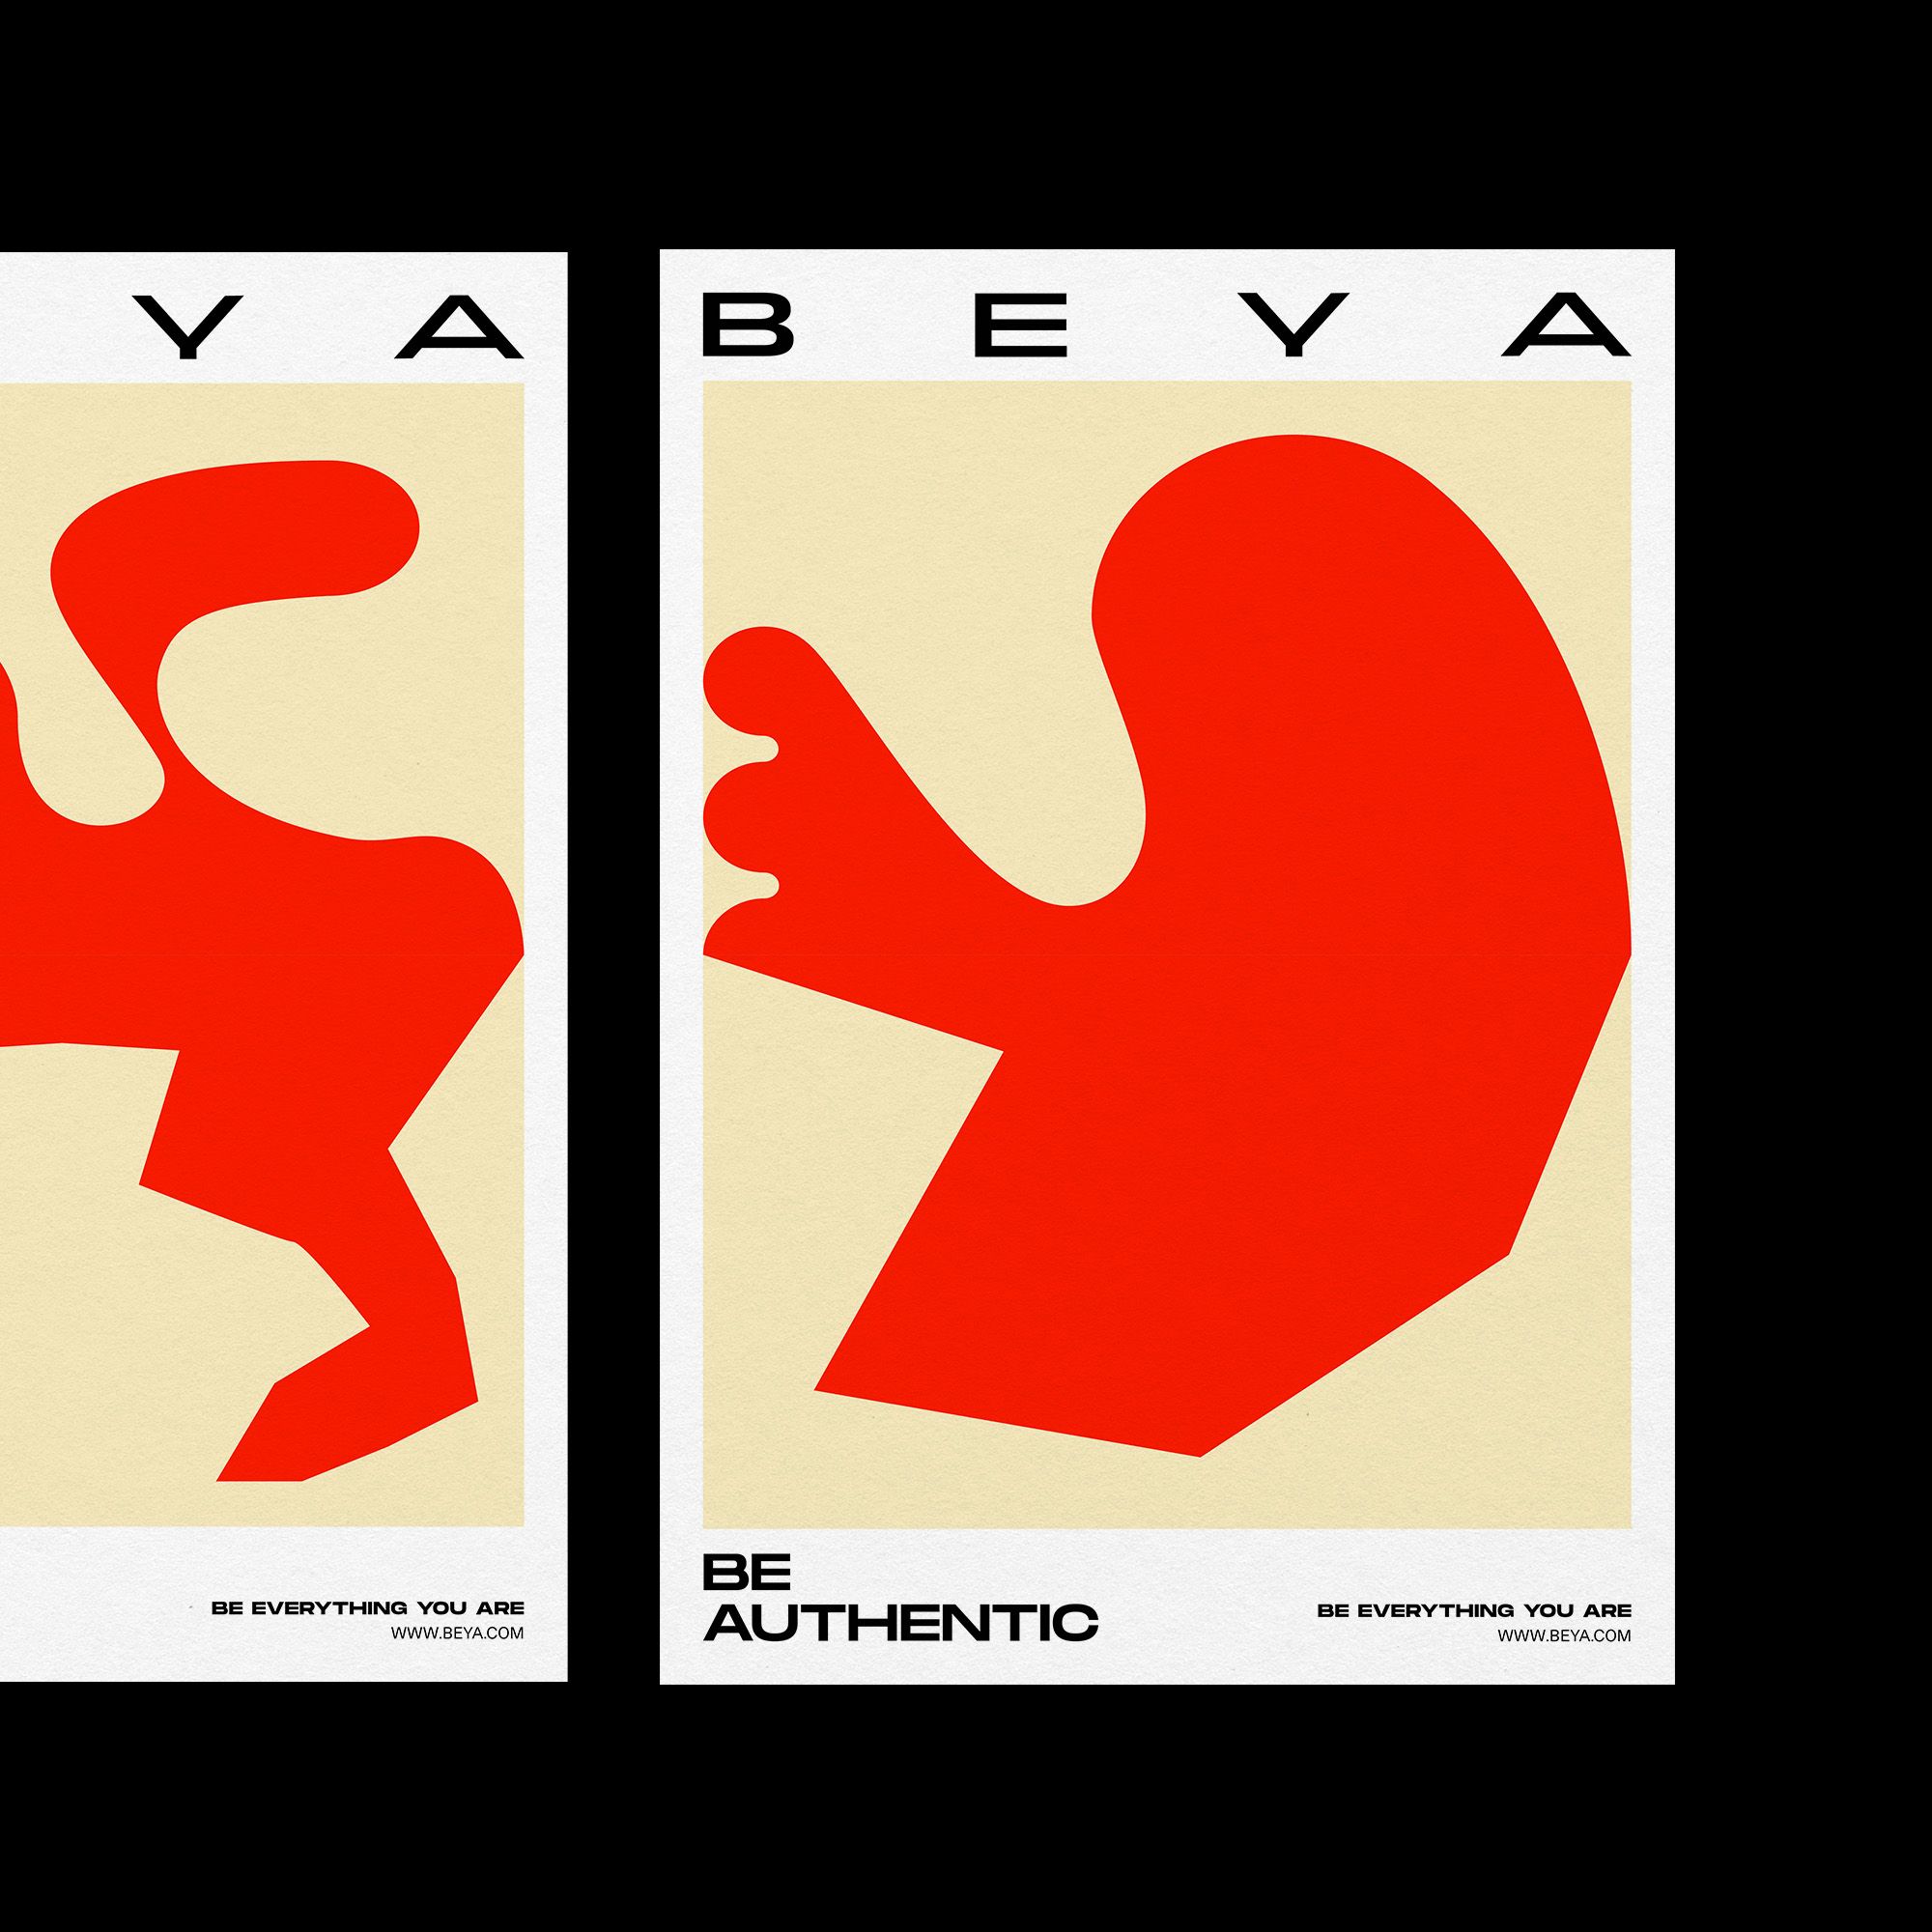 BEYA branding brand identity corporate design agentur wien